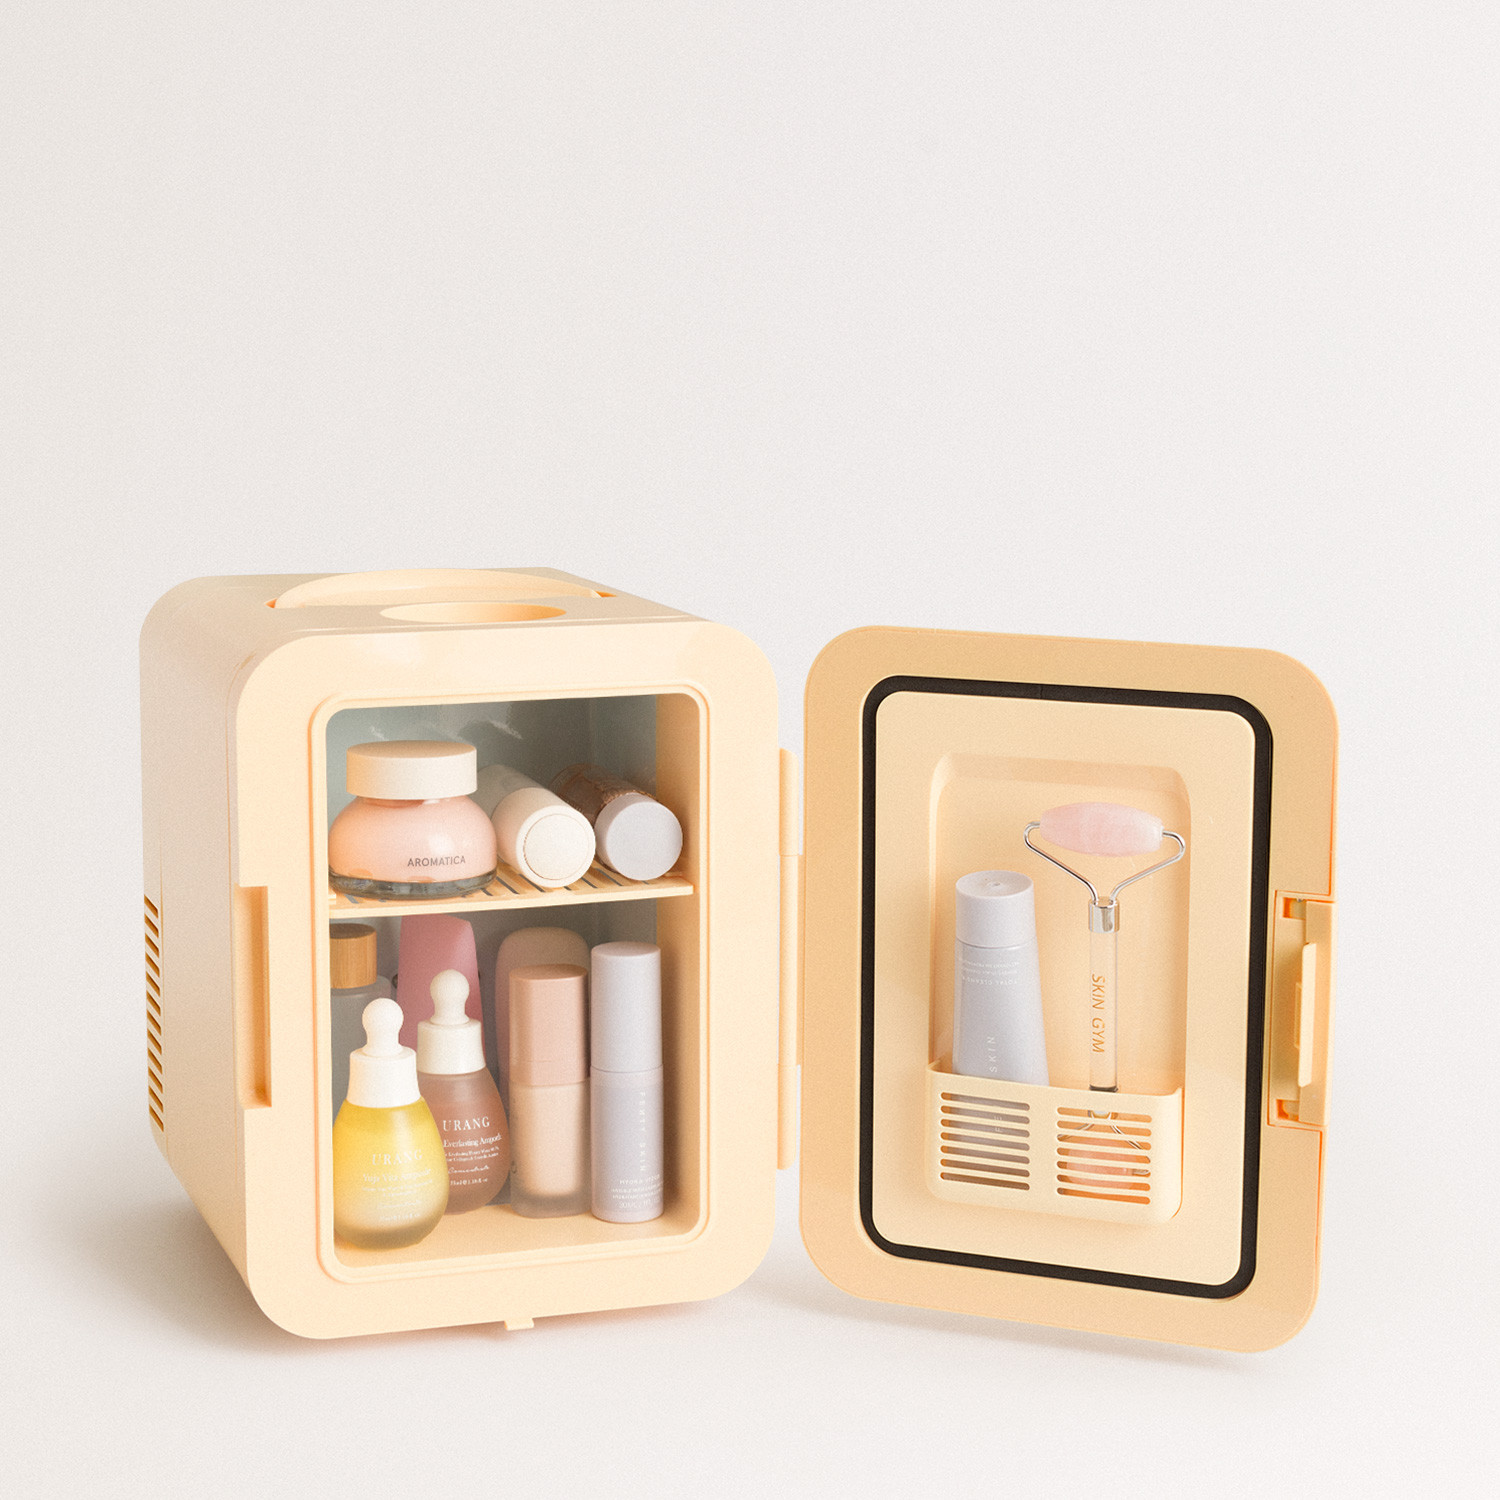 La mini nevera para cosméticos de Create IKOHS es la mejor compra